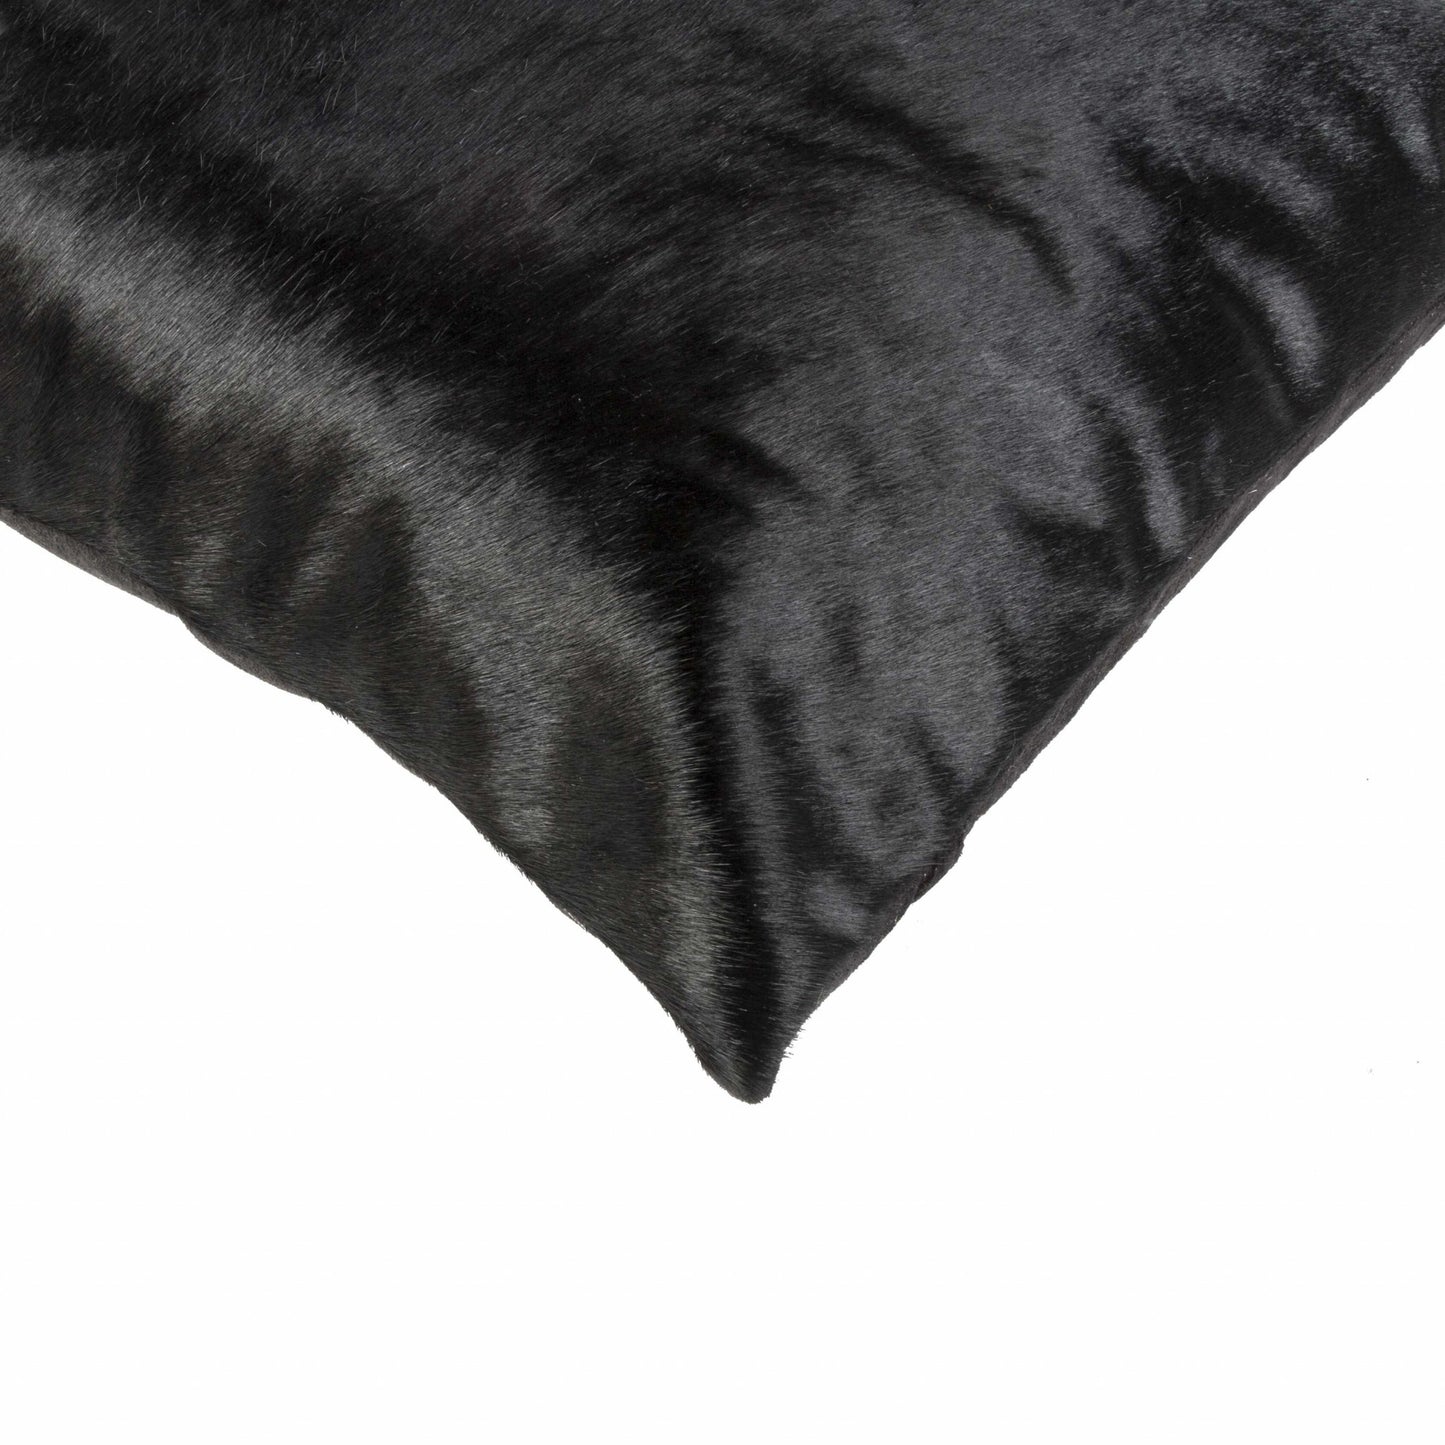 18" Black Cowhide Throw Pillow